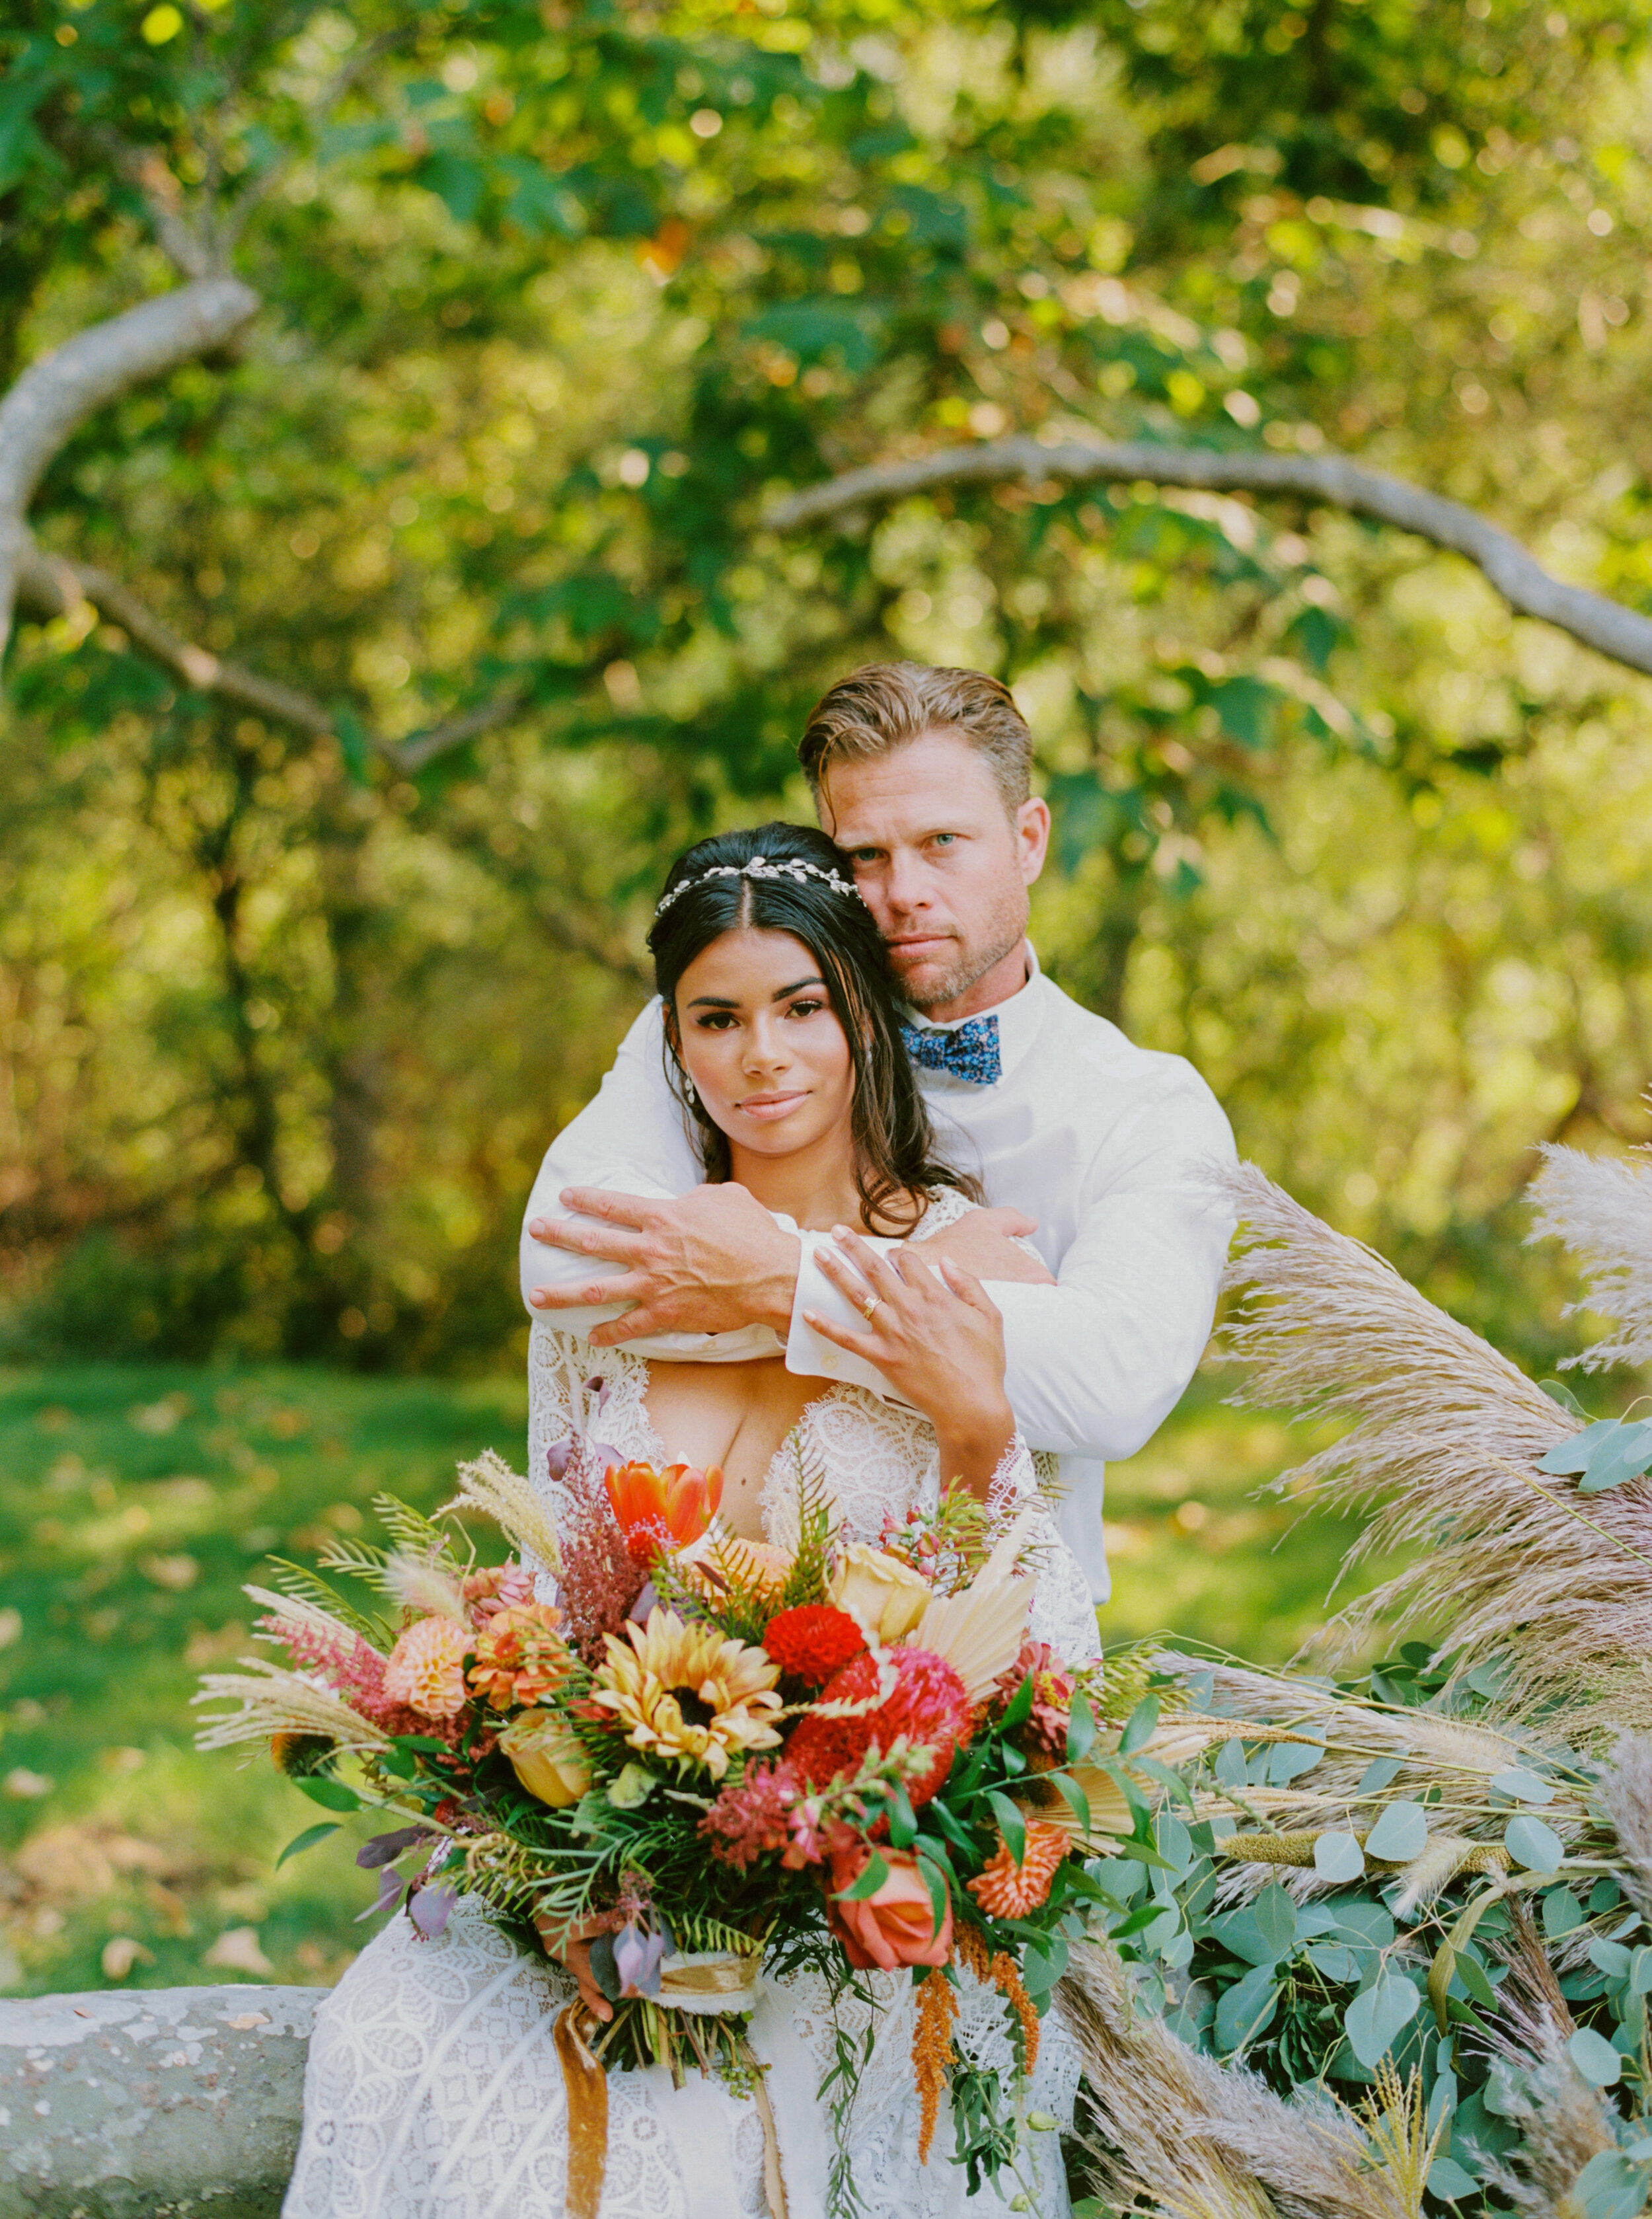 Sarahi Hadden - An Earthy Summer Boho Inspired Wedding with Sunset Hues at Gardener Ranch-44.jpg